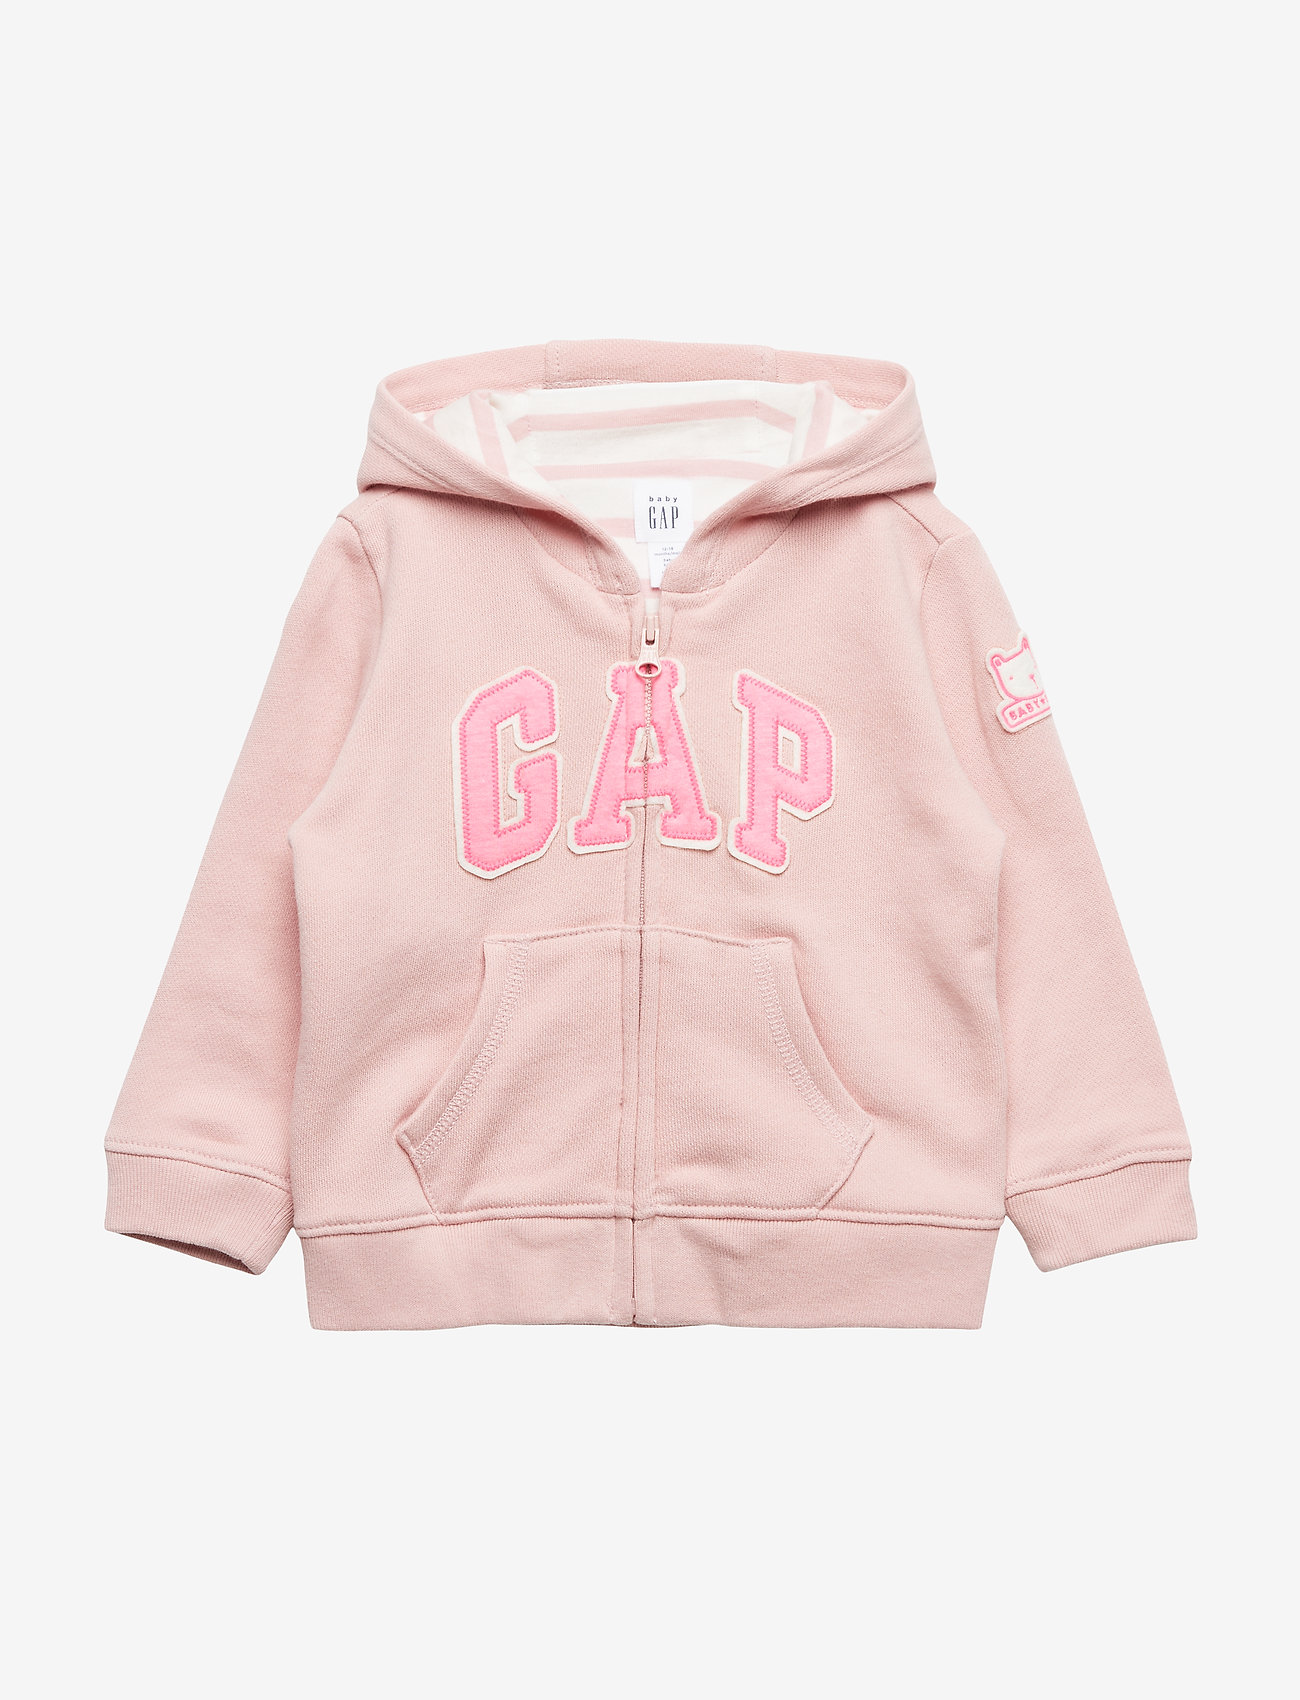 gap pink sweatshirt